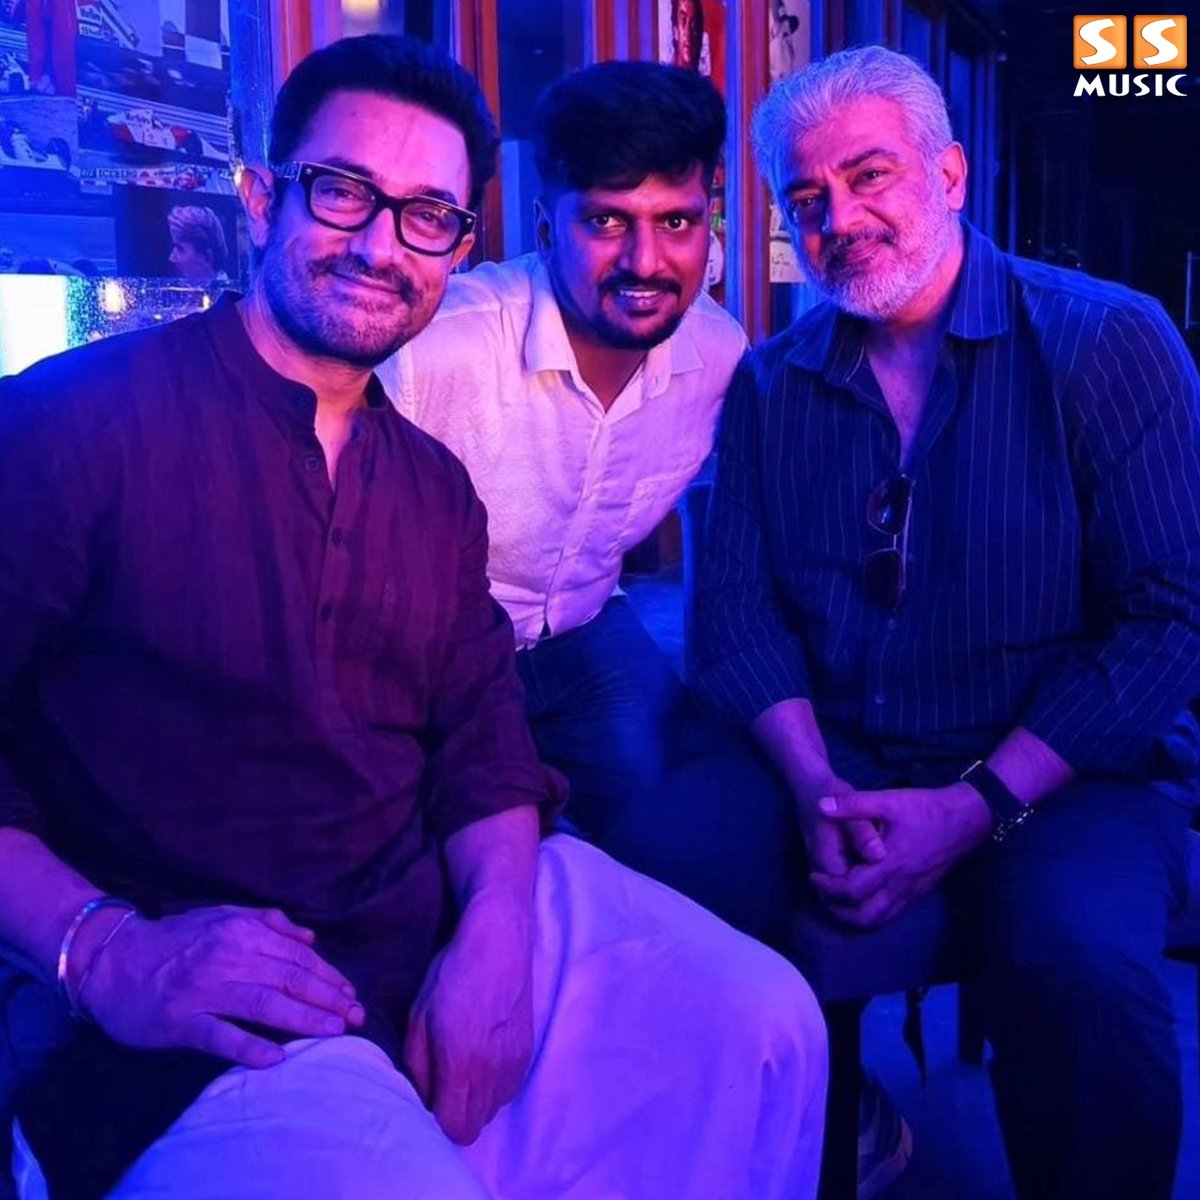 When AK meets another AK. 😎🔥
.
#AamirKhan #HBDAjithKumar #HappyBirthdayAjithKumar #AK #VidaaMuyarachi #GoodBadUgly #HappyBirthdayAK #Ajithkumar #SSMusic